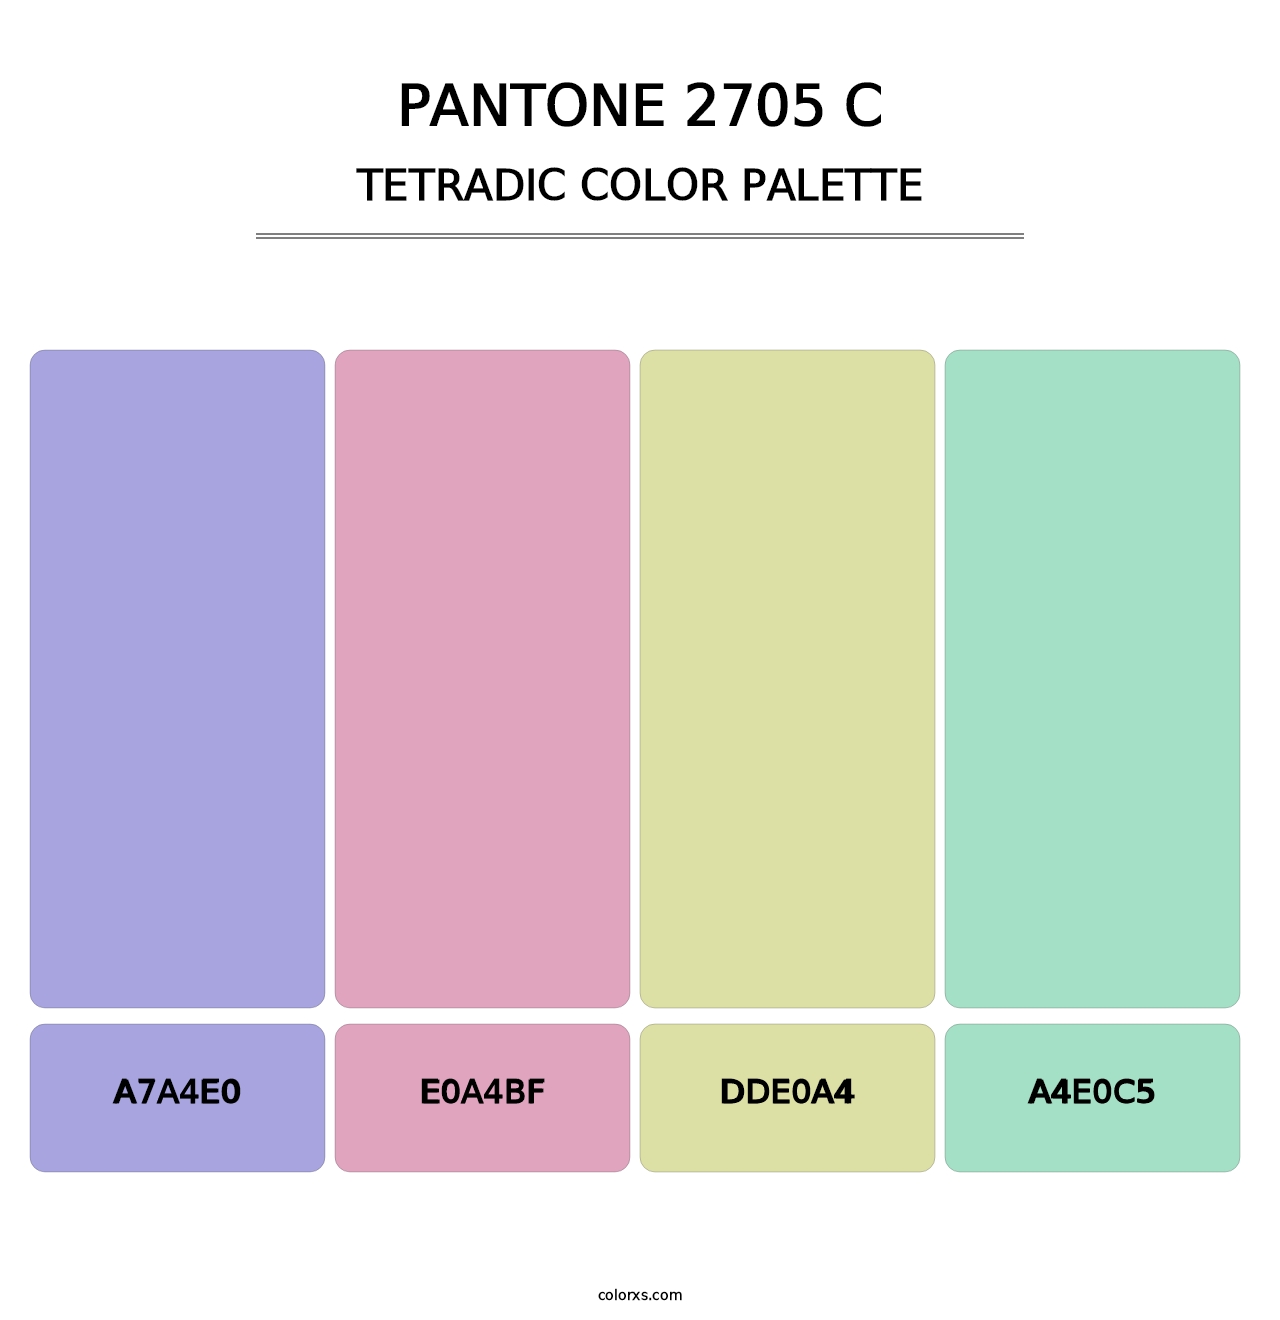 PANTONE 2705 C - Tetradic Color Palette